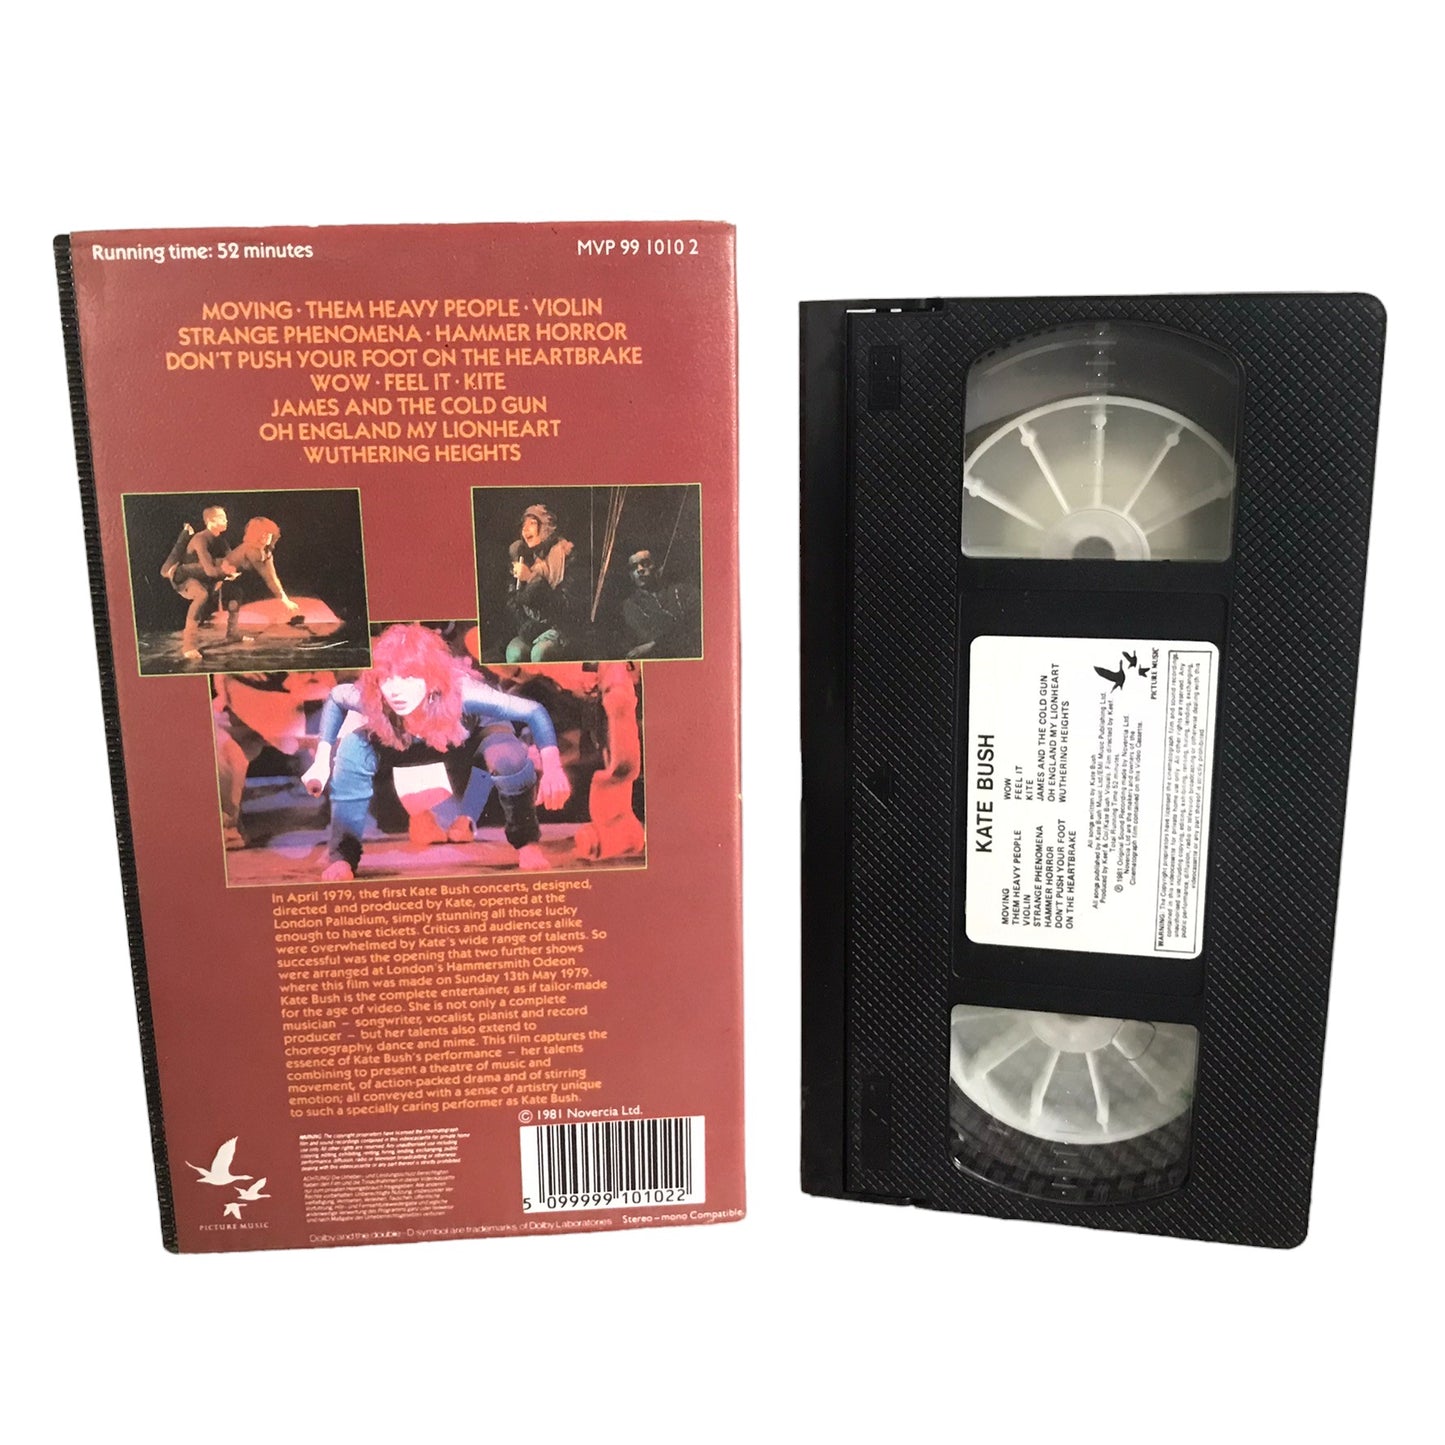 Kate Bush - Picture Music - Music - Pal - VHS-